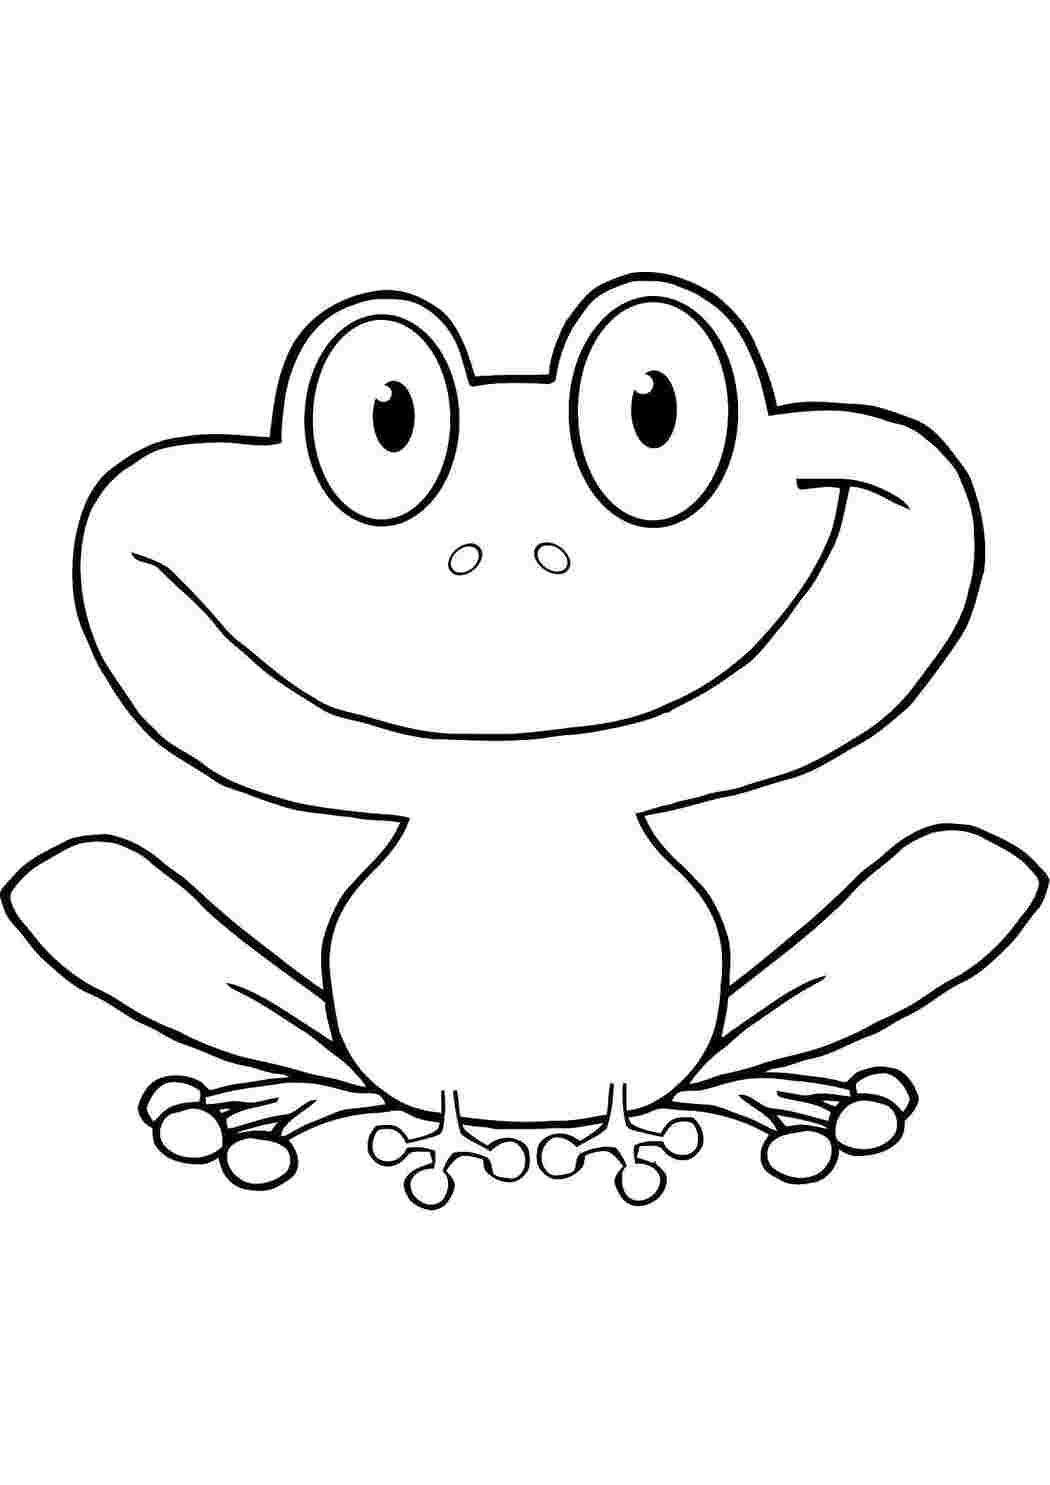 Мордочка лягушки раскраска для детей